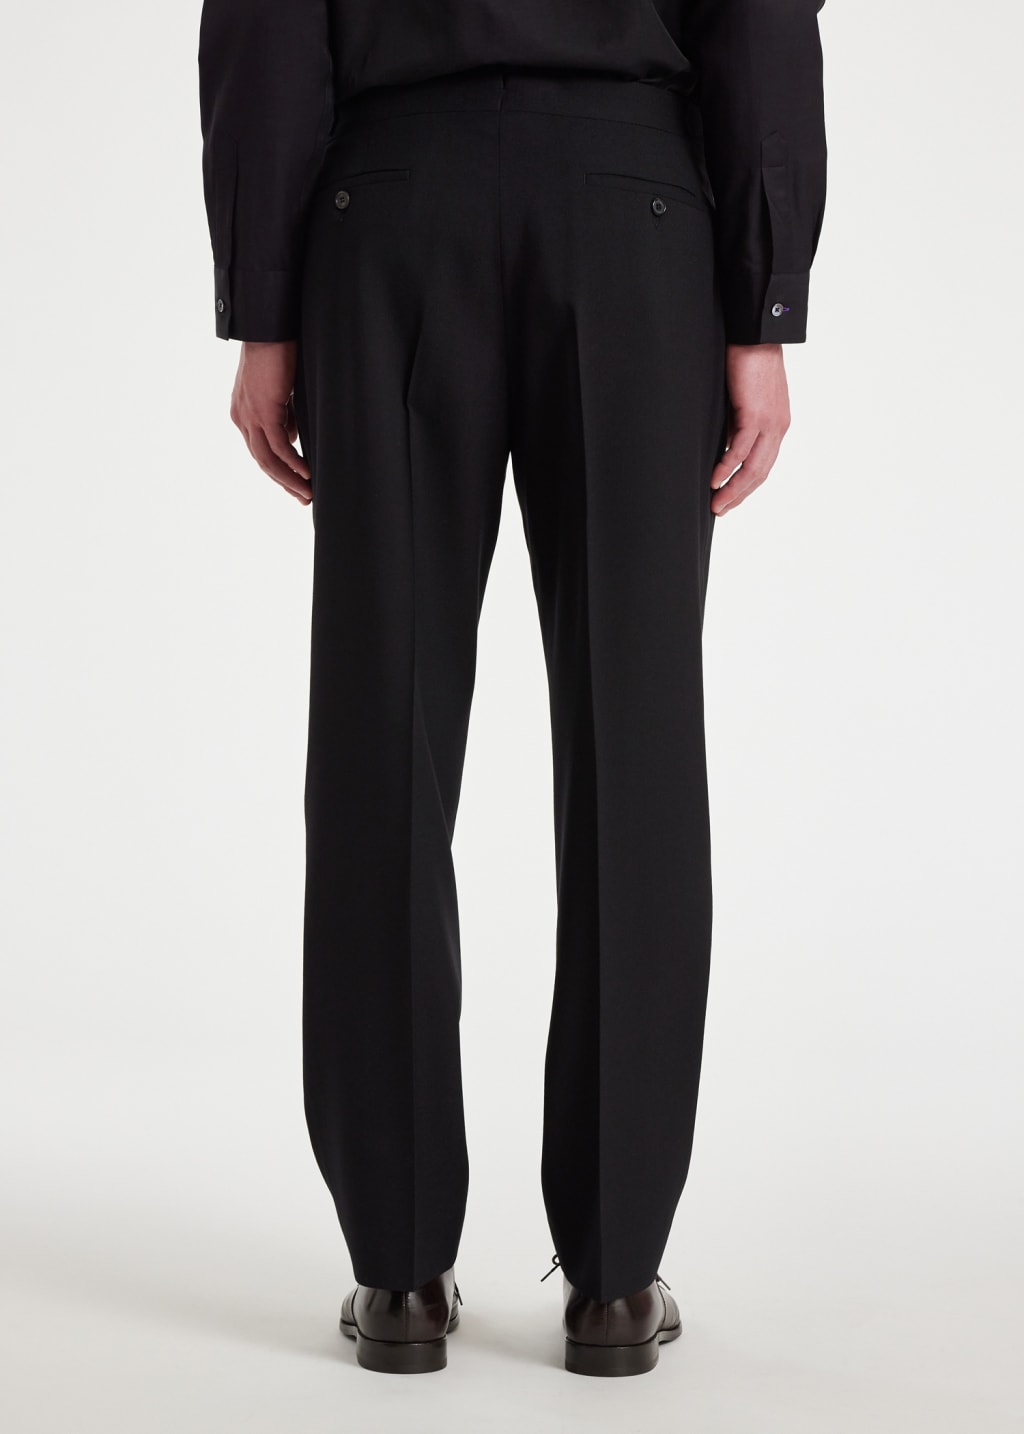 Model View - Black Double-Pleat Wool Trousers Paul Smith